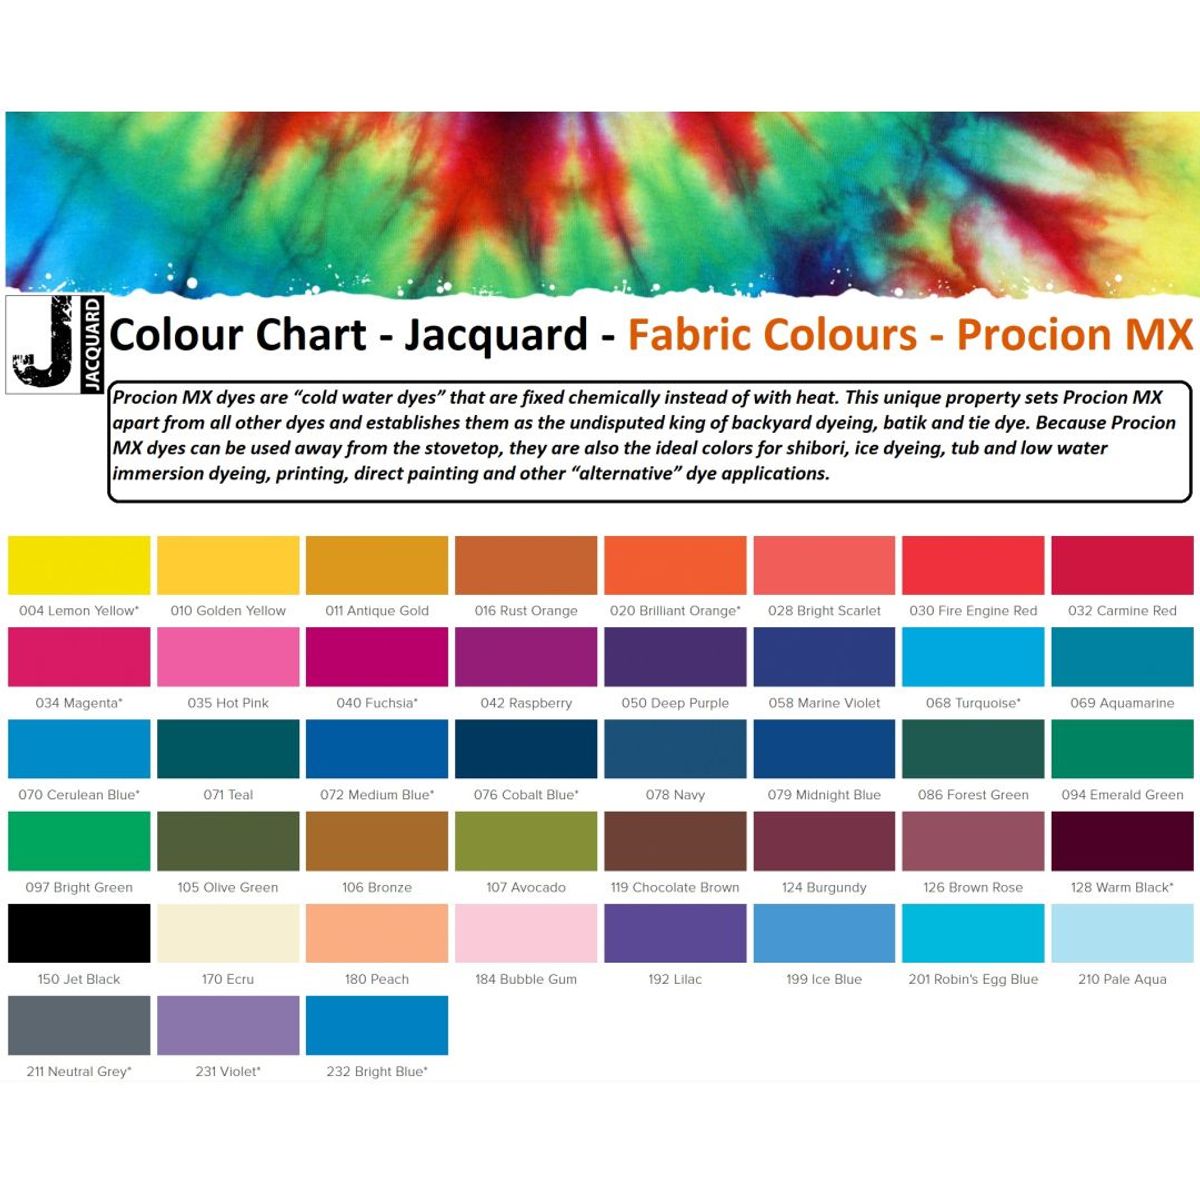 Jacquard - Procion MX Dye - Fabric Textile - Choclate Brown 119